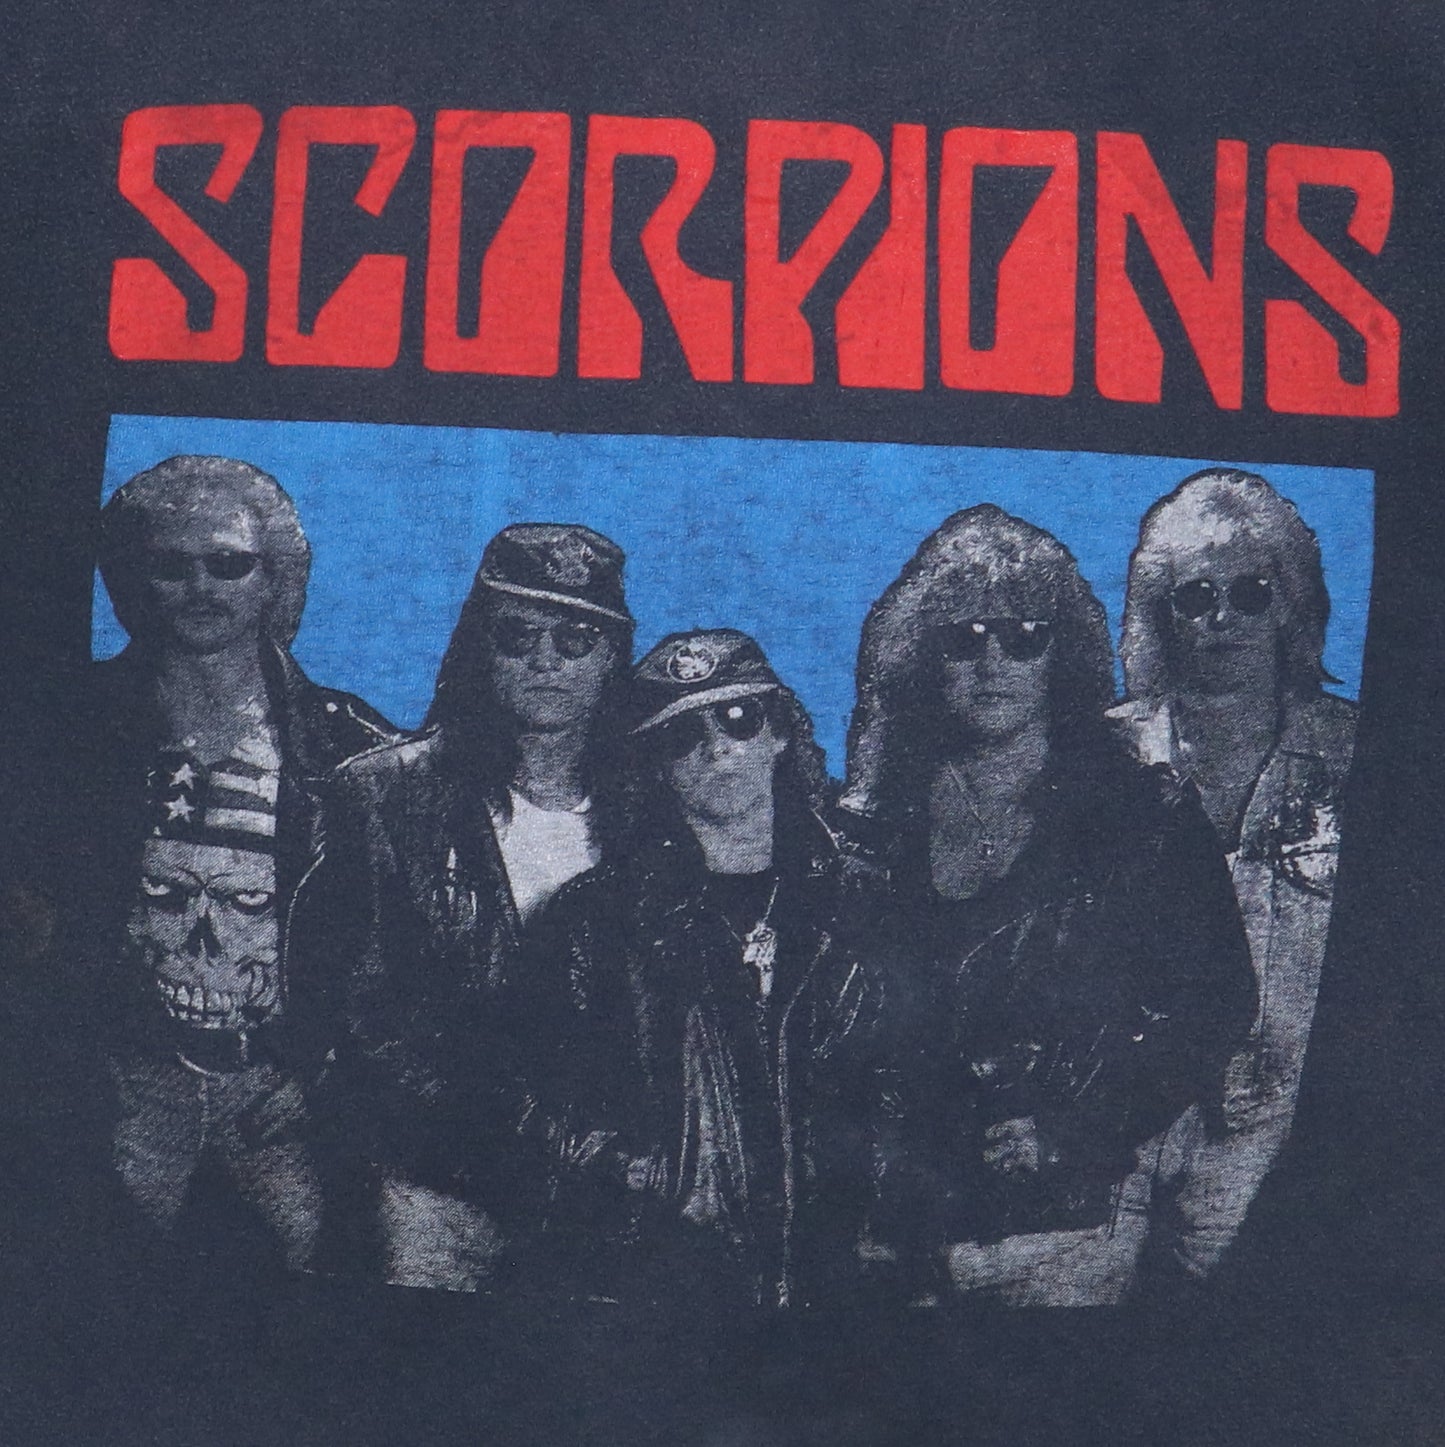 1991 Scorpions Tour Shirt